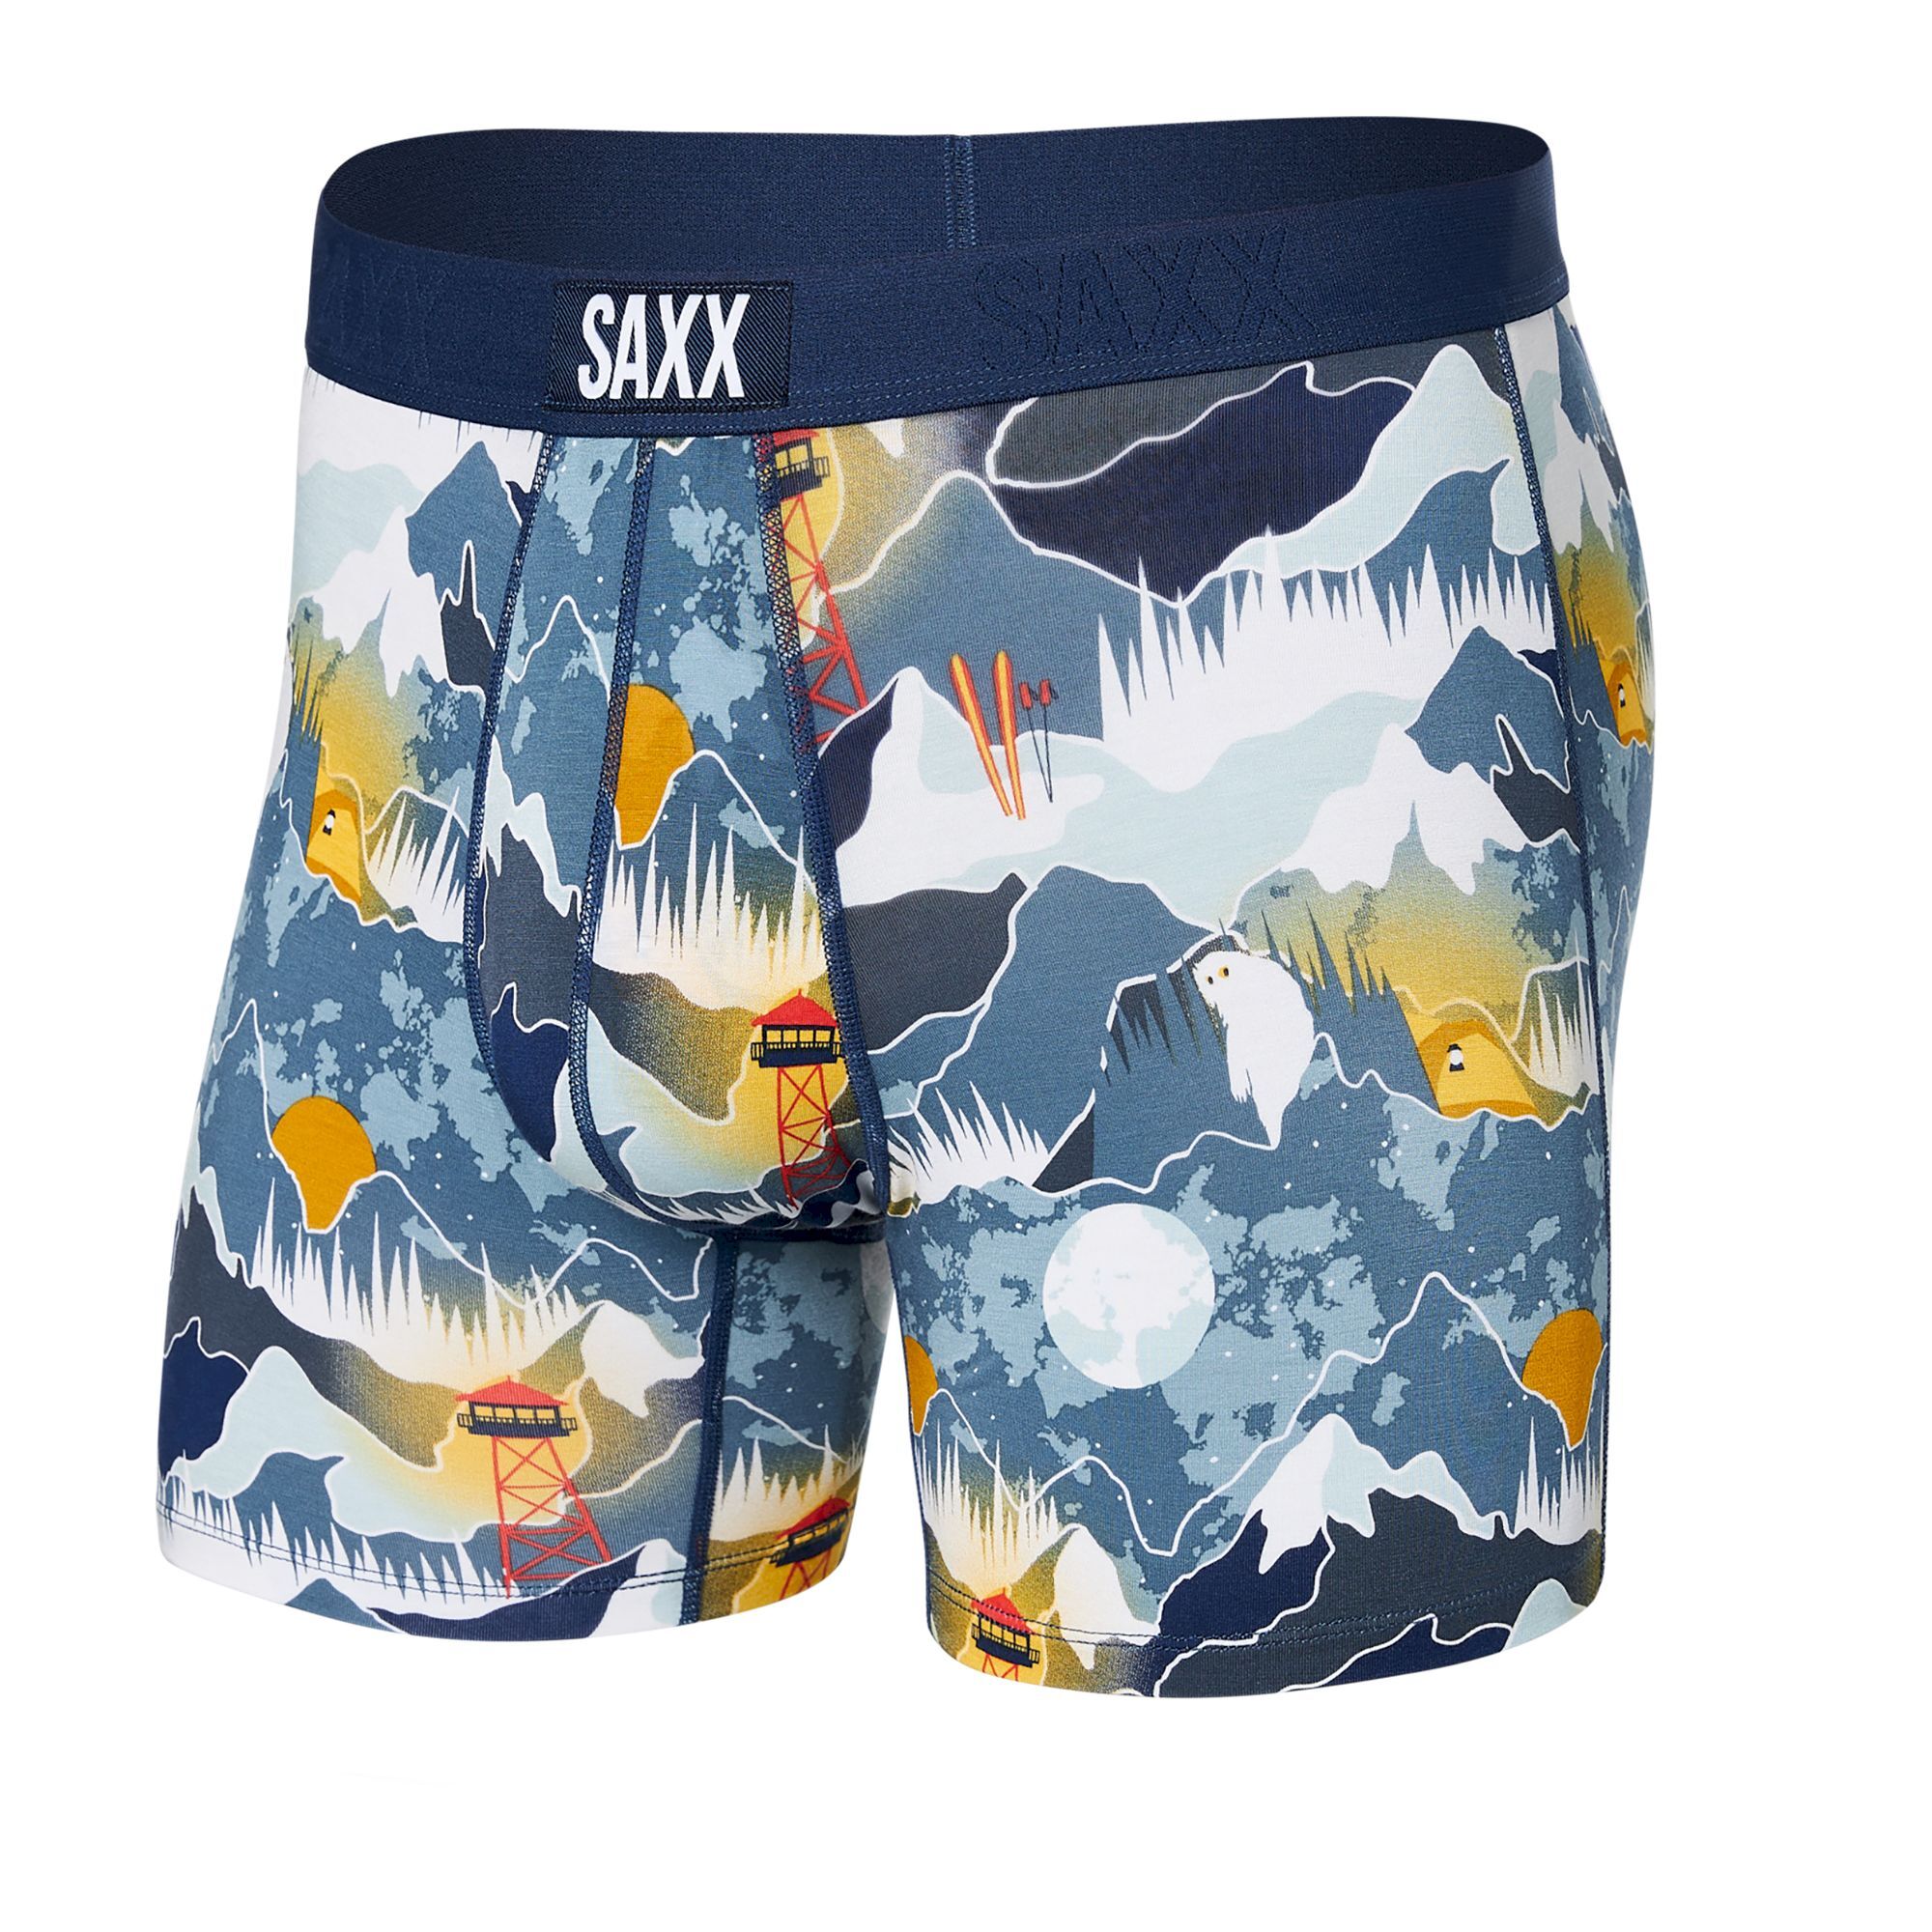 Saxx Vibe Boxer Brief - Underwear - Men's